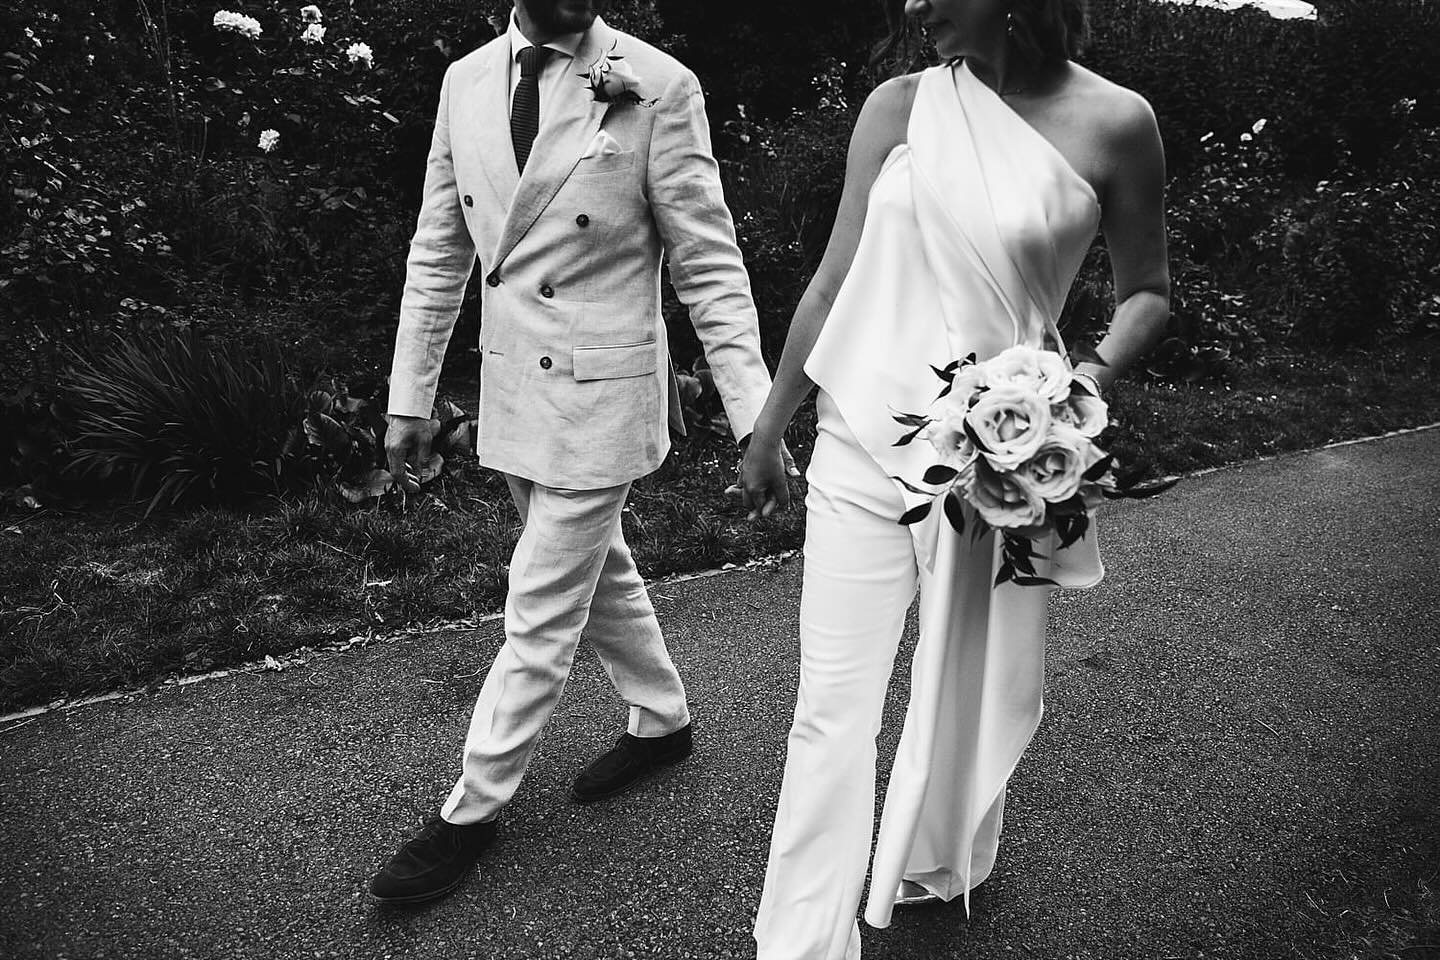 Just married Alicja &amp; Andrzej at Morden Park House.

venue @morden_park_house 

#londonwedding #citywedding #justmarried #mordenparkhouse #londonweddingphotographer #microwedding #smallwedding #documentaryweddingphotography